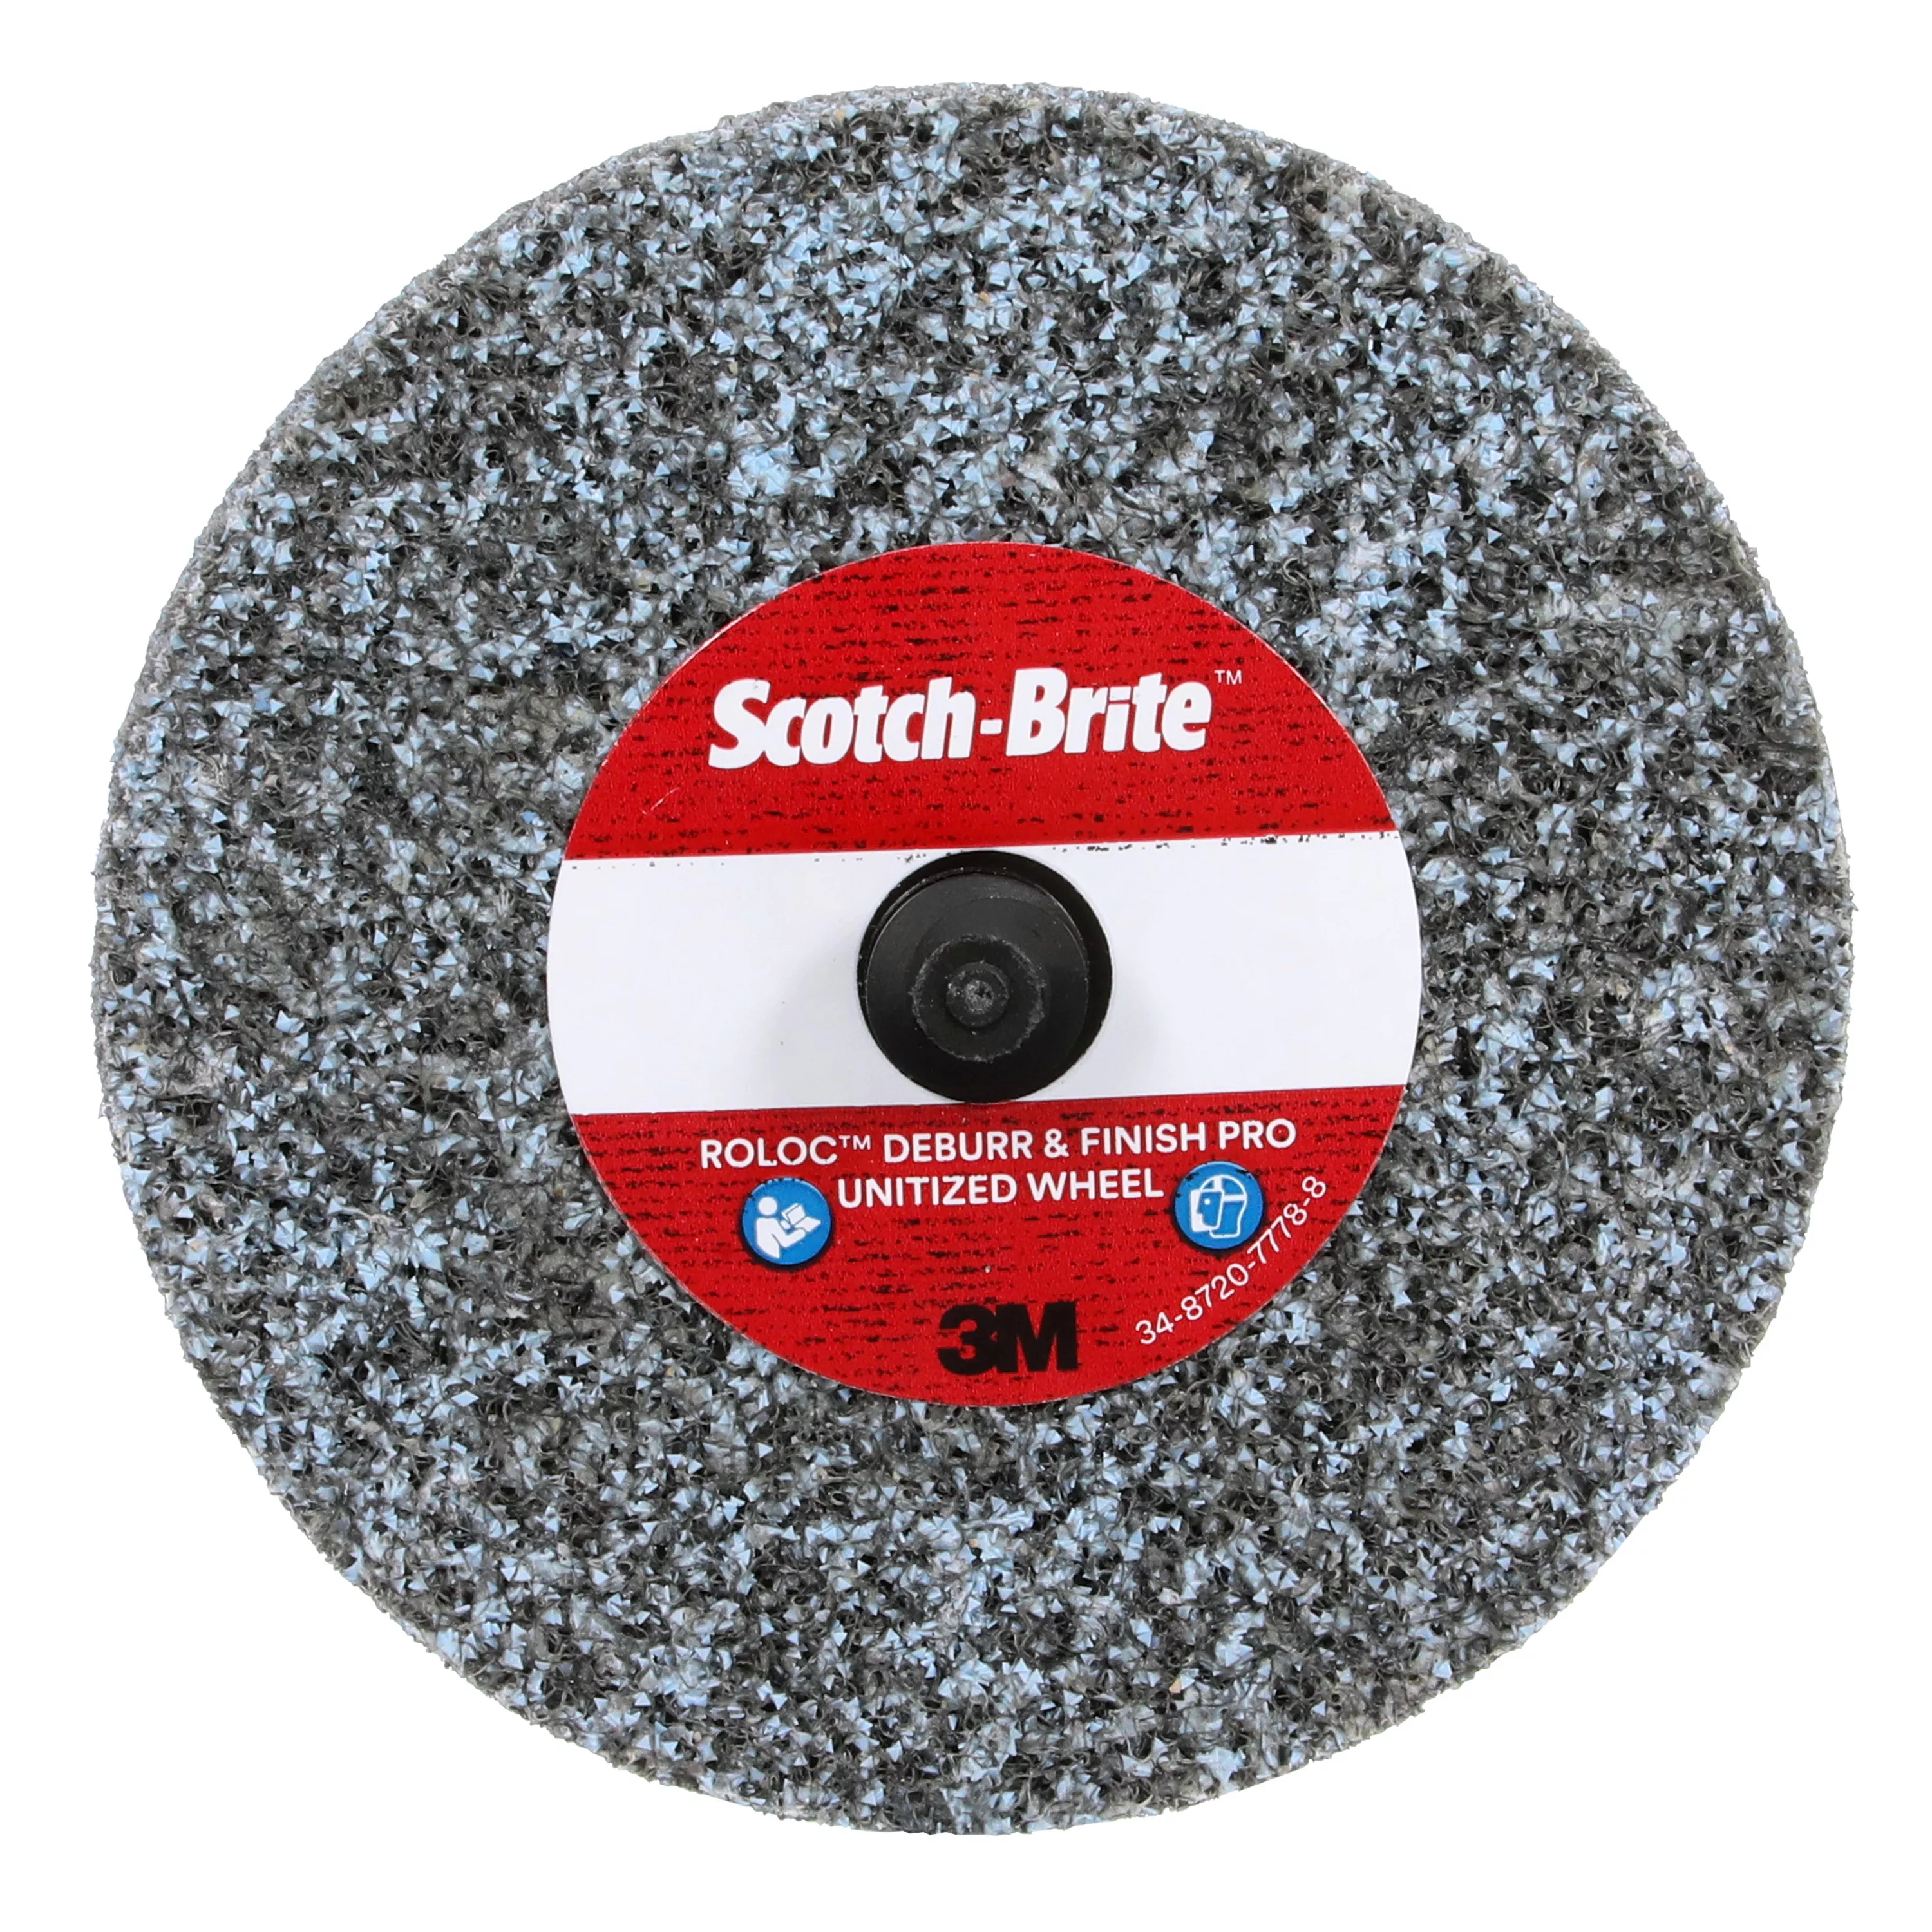 SKU 7010300983 | Scotch-Brite™ Roloc™ Deburr & Finish PRO Unitized Wheel